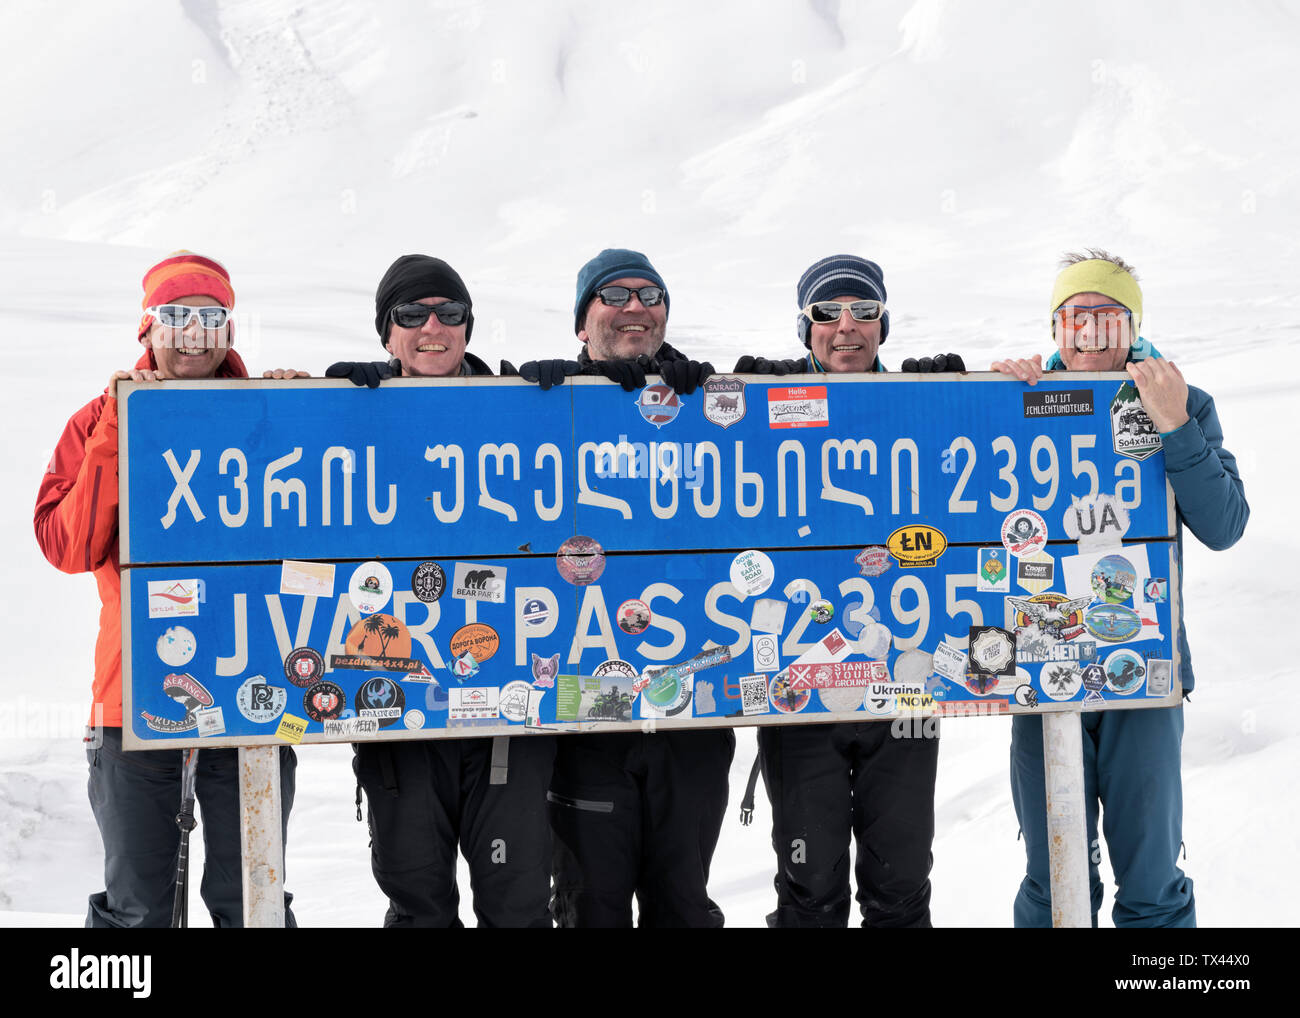 Georgia, Caucasus, Gudauri, portrait of happy ski tourers holding a sign Stock Photo